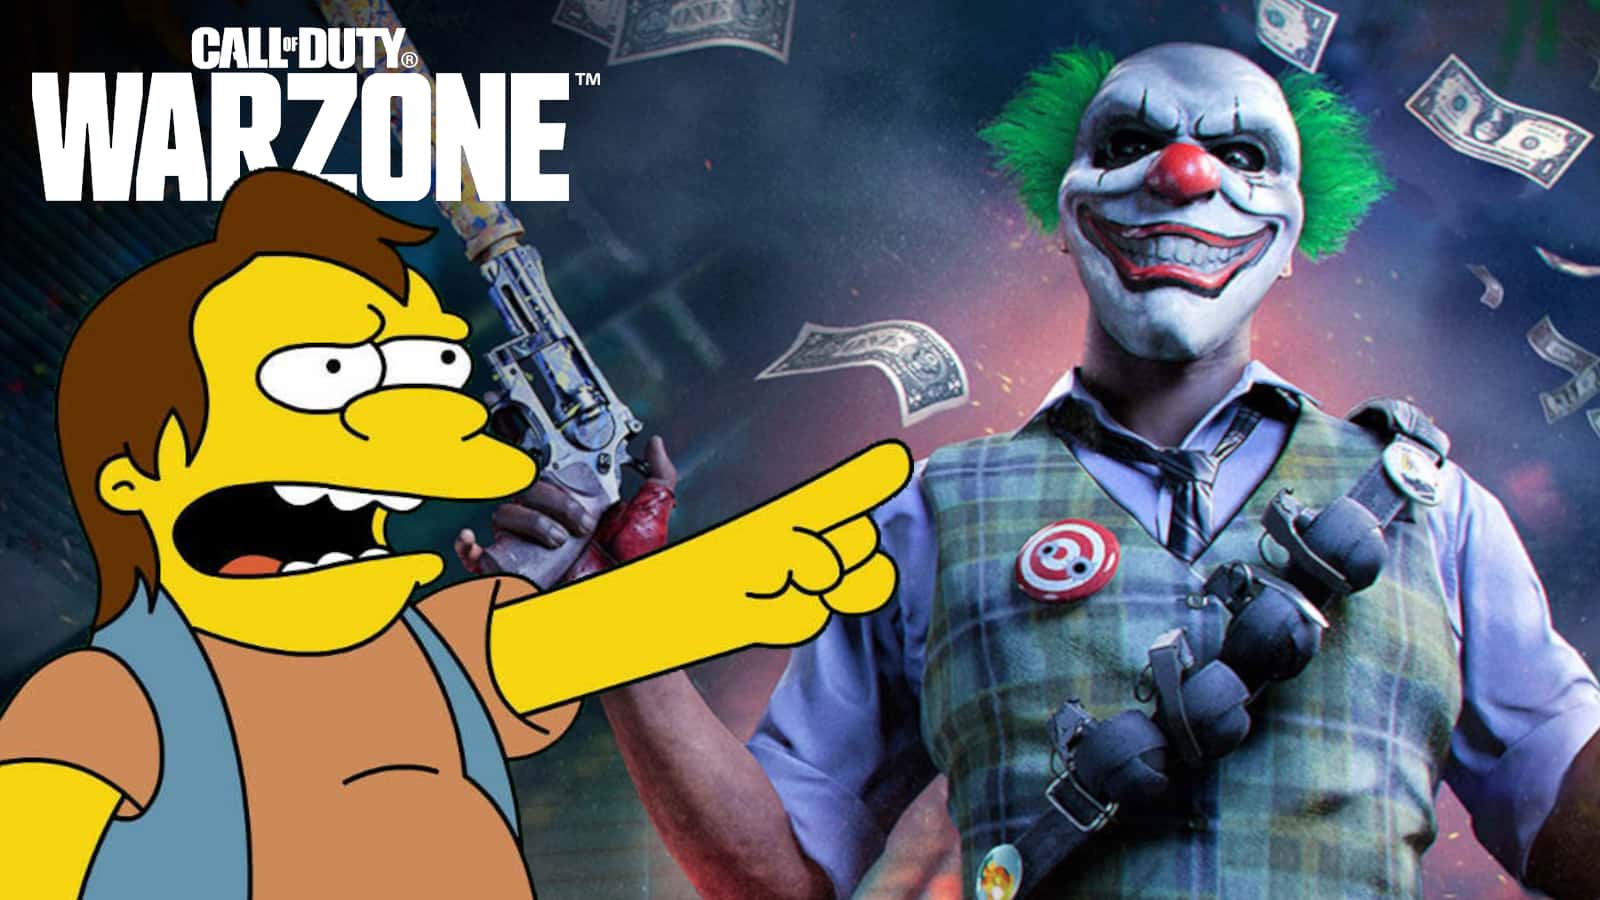 Call of Duty Warzone Jokers 